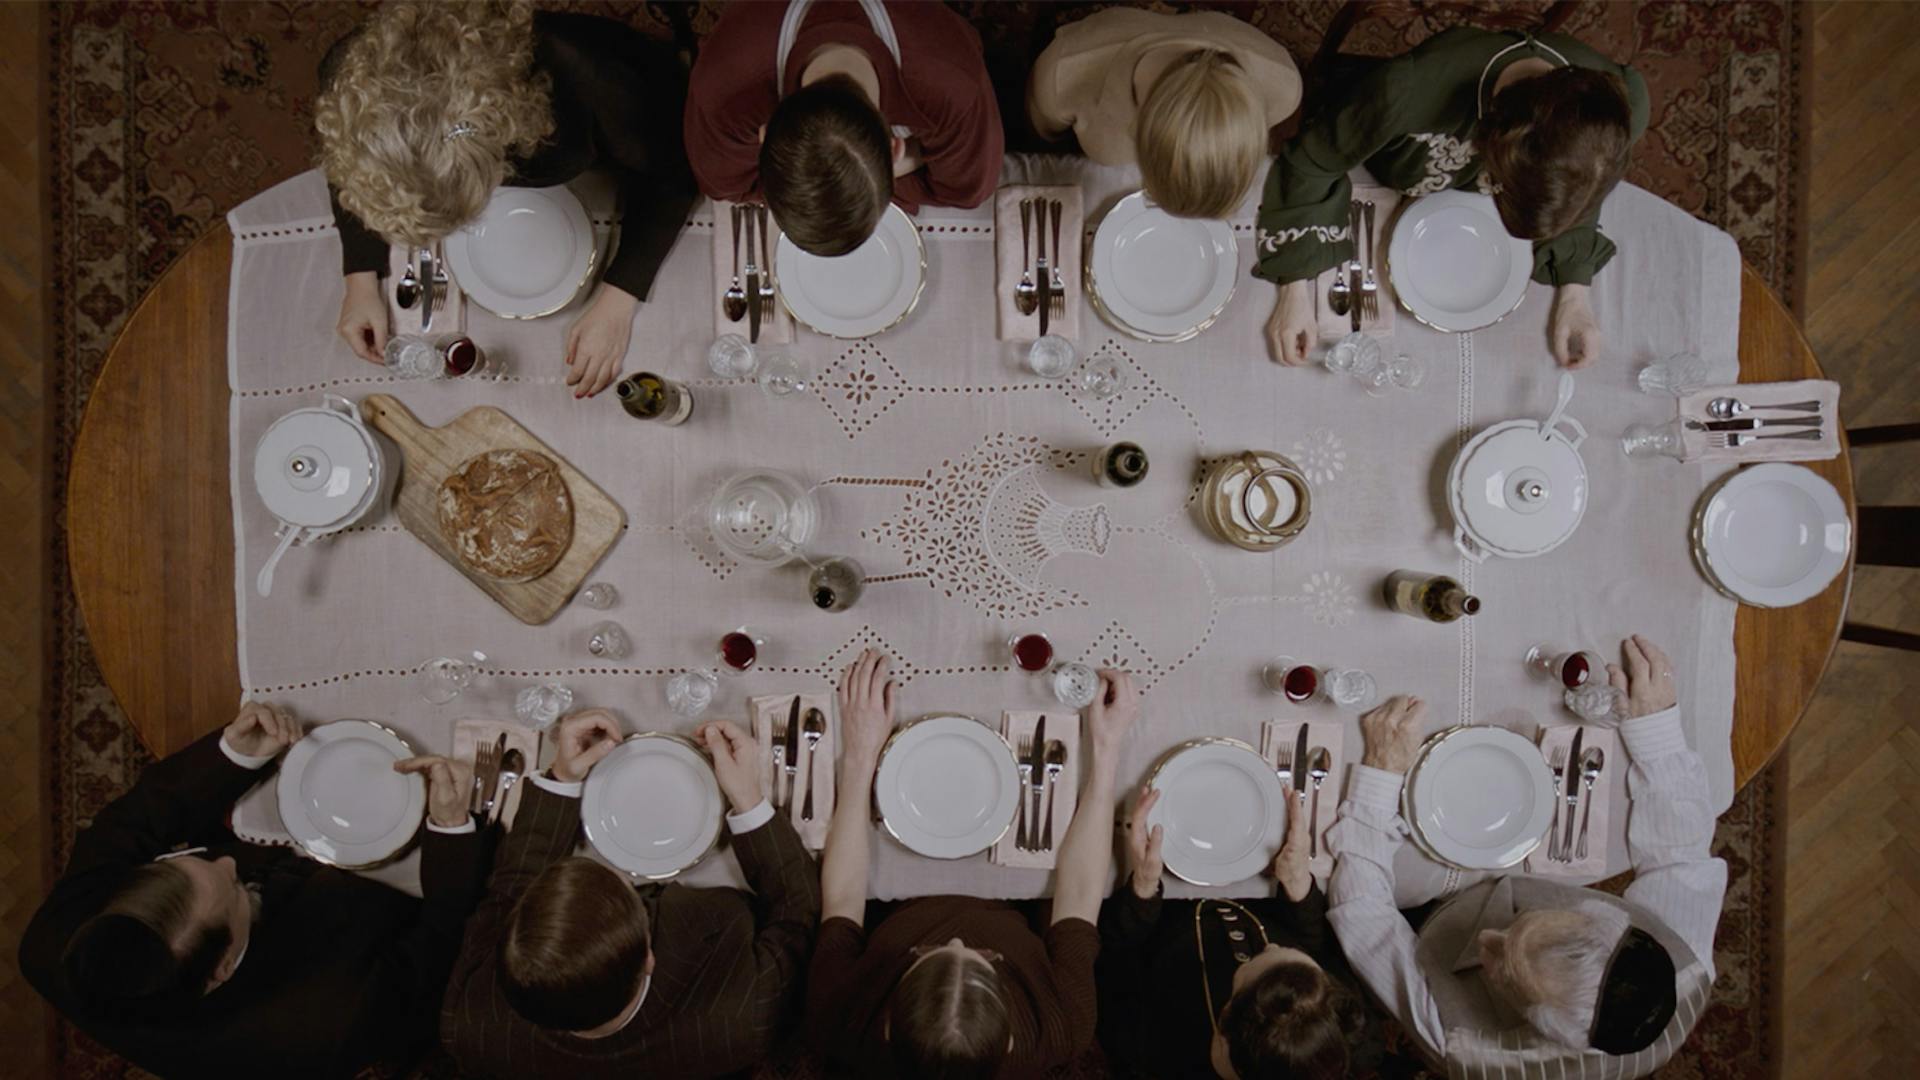 The Last Supper (Das Letzte Mahl)